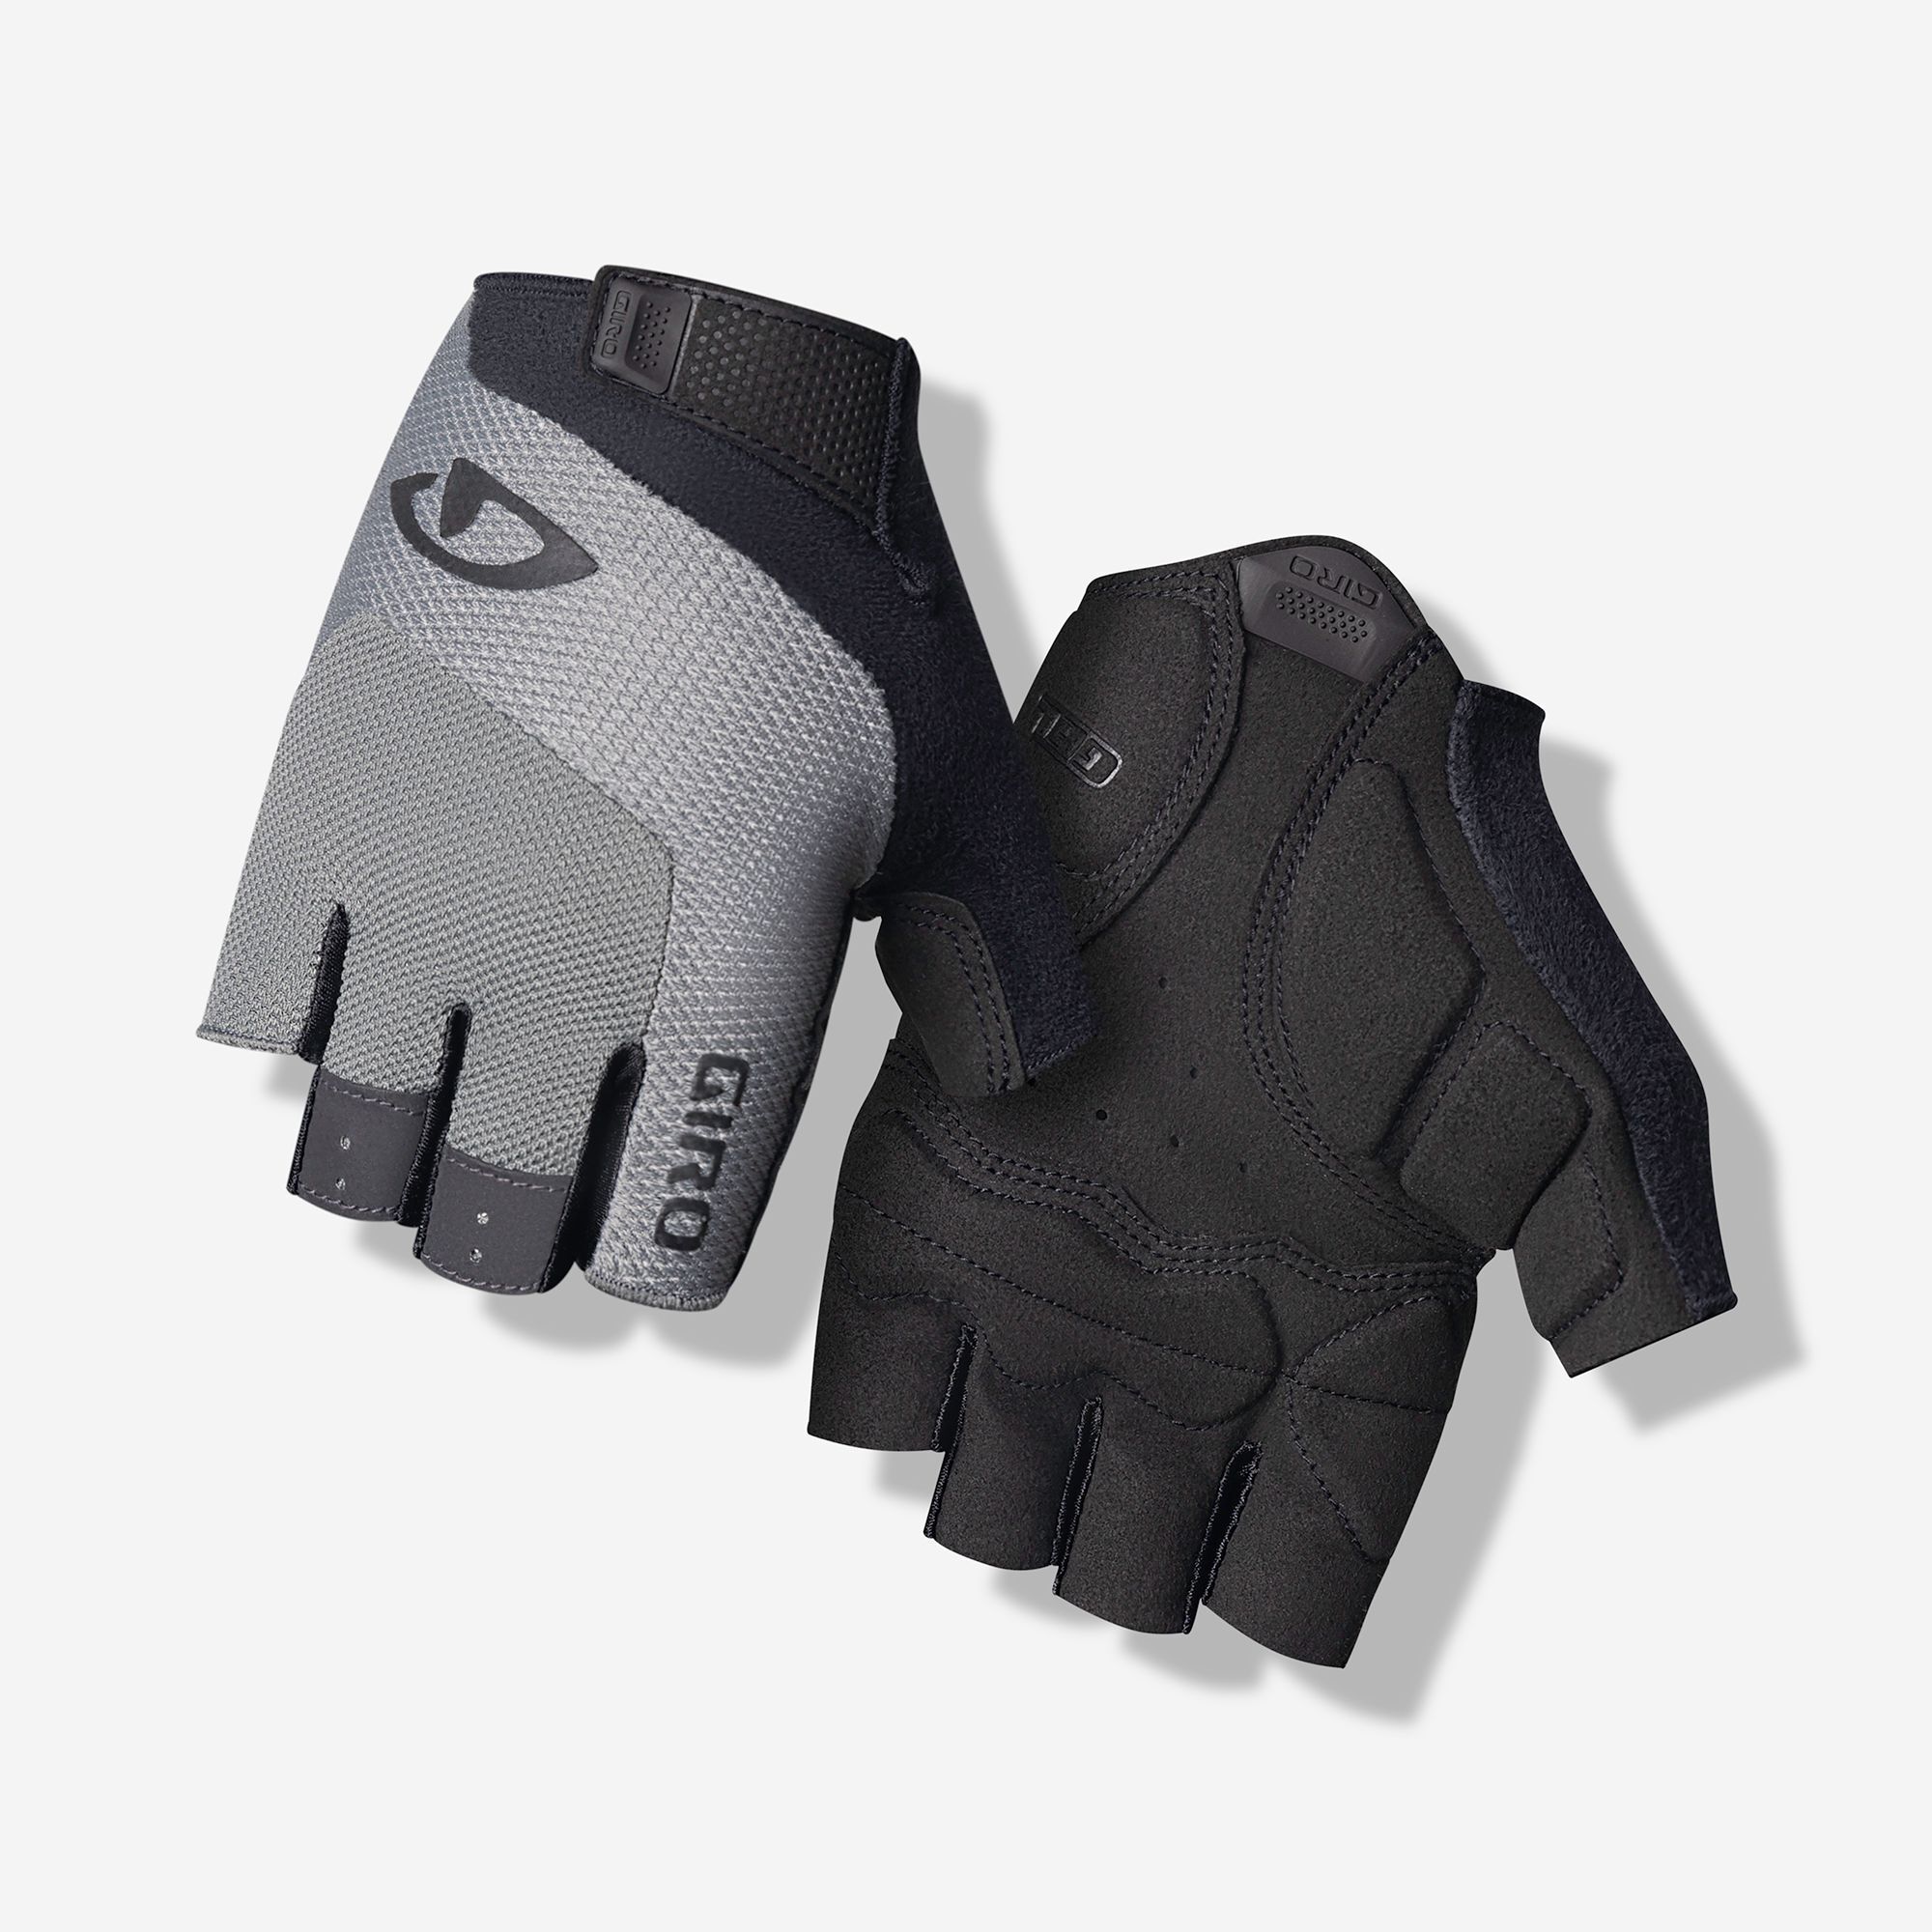 Giro Bravo Gel Cycling Gloves Suede Black Medium M 8 